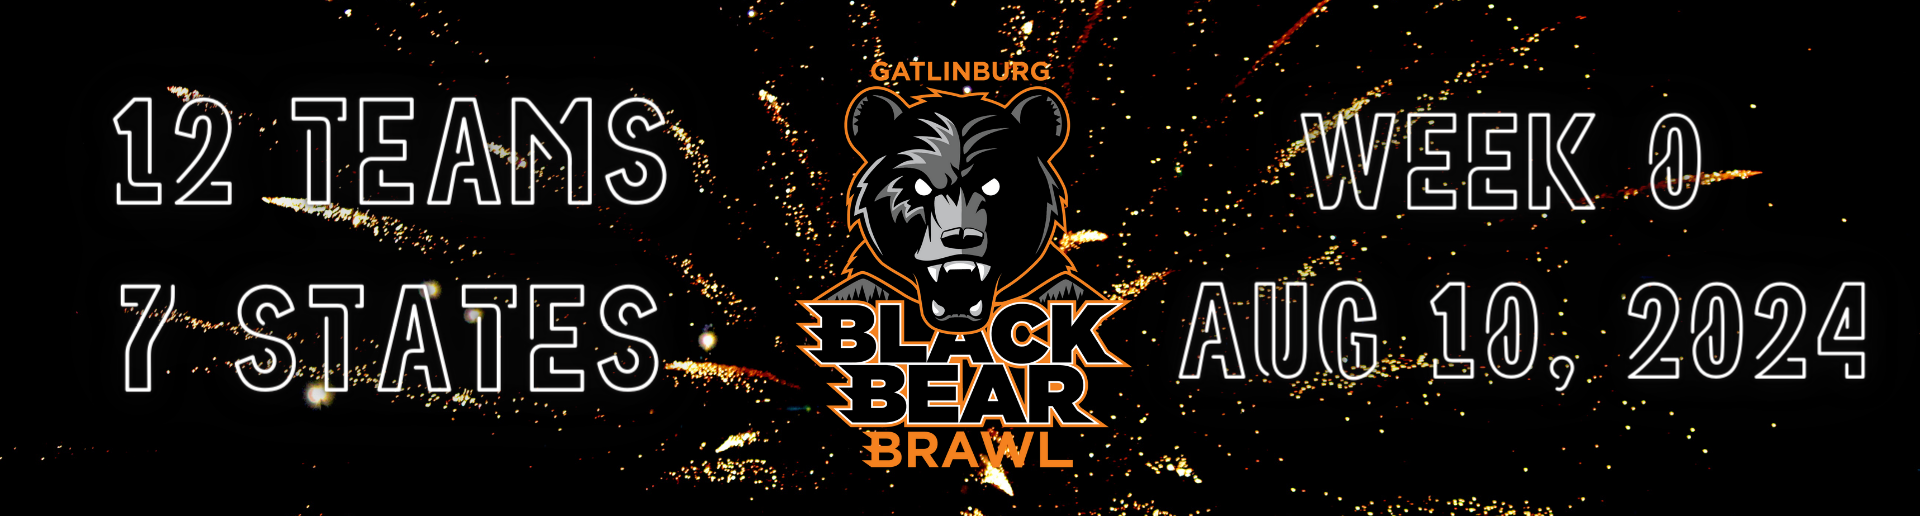 Gatlinburg Black Bear Brawl Week 0